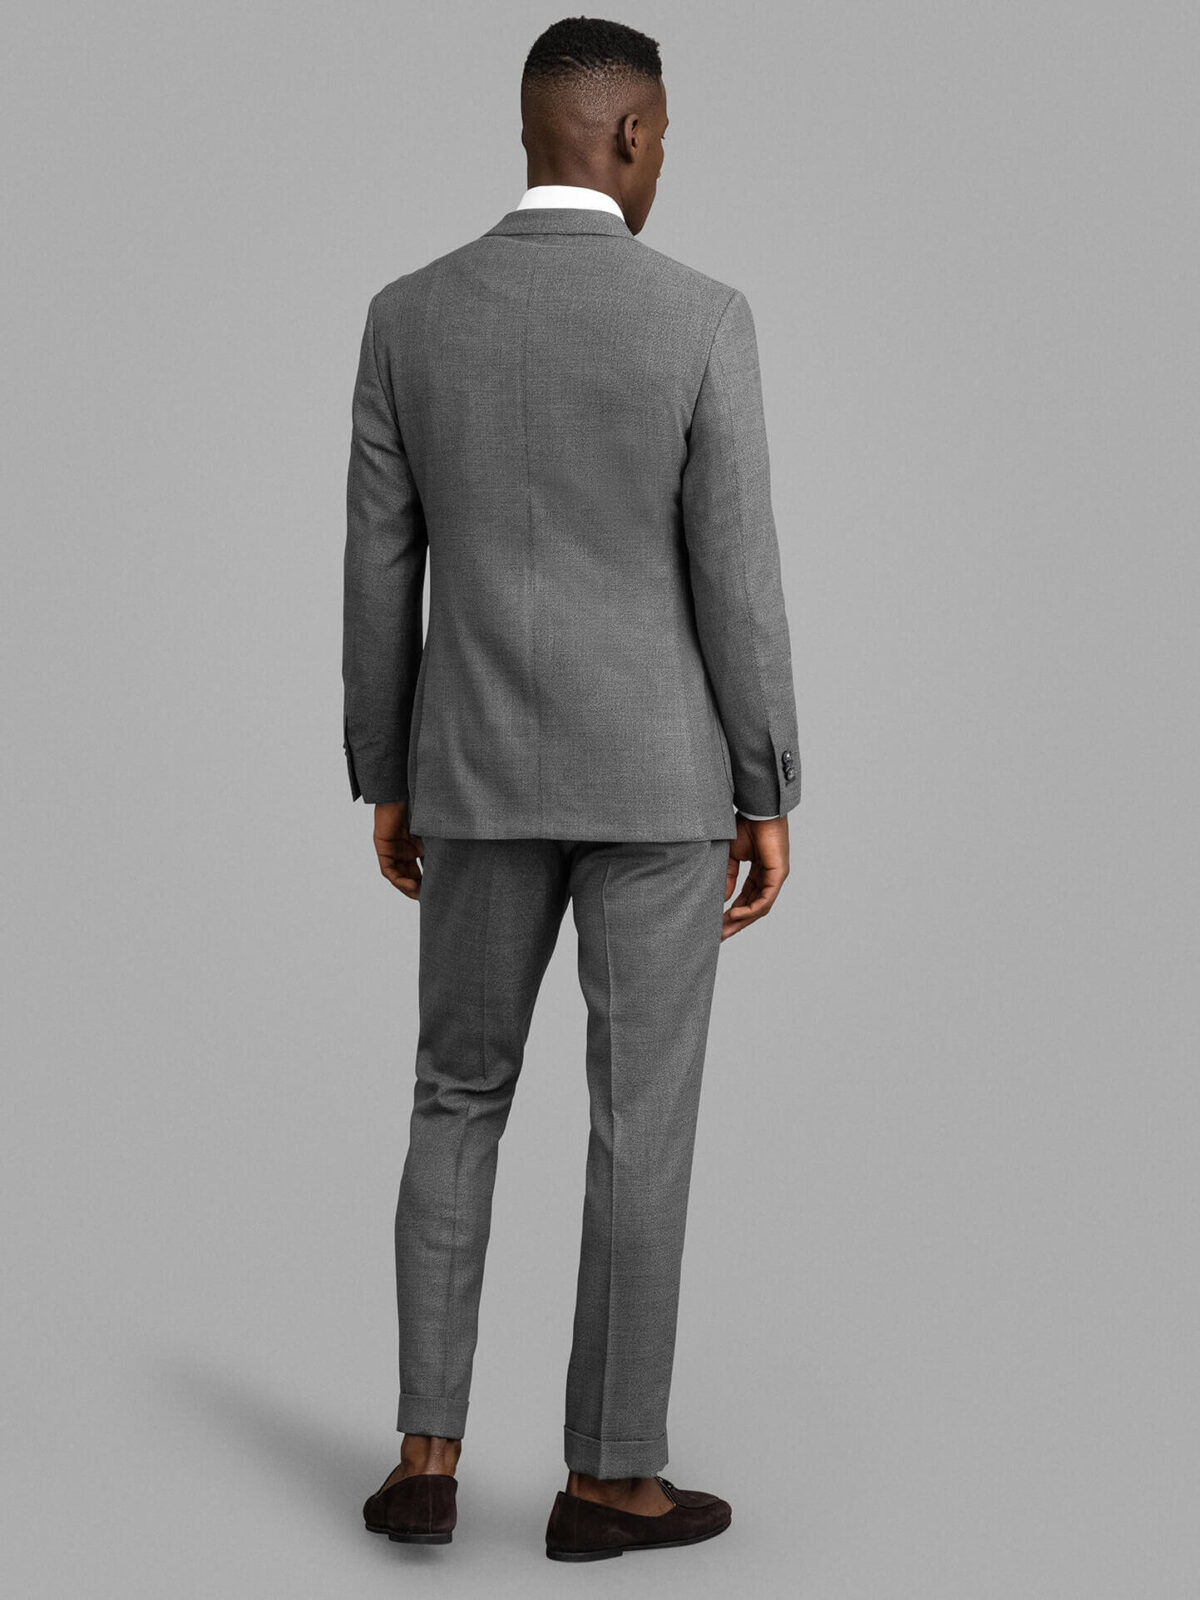 Proper Cloth Loro Piana Fabric Grey S150s Mercer Men's Custom Suit